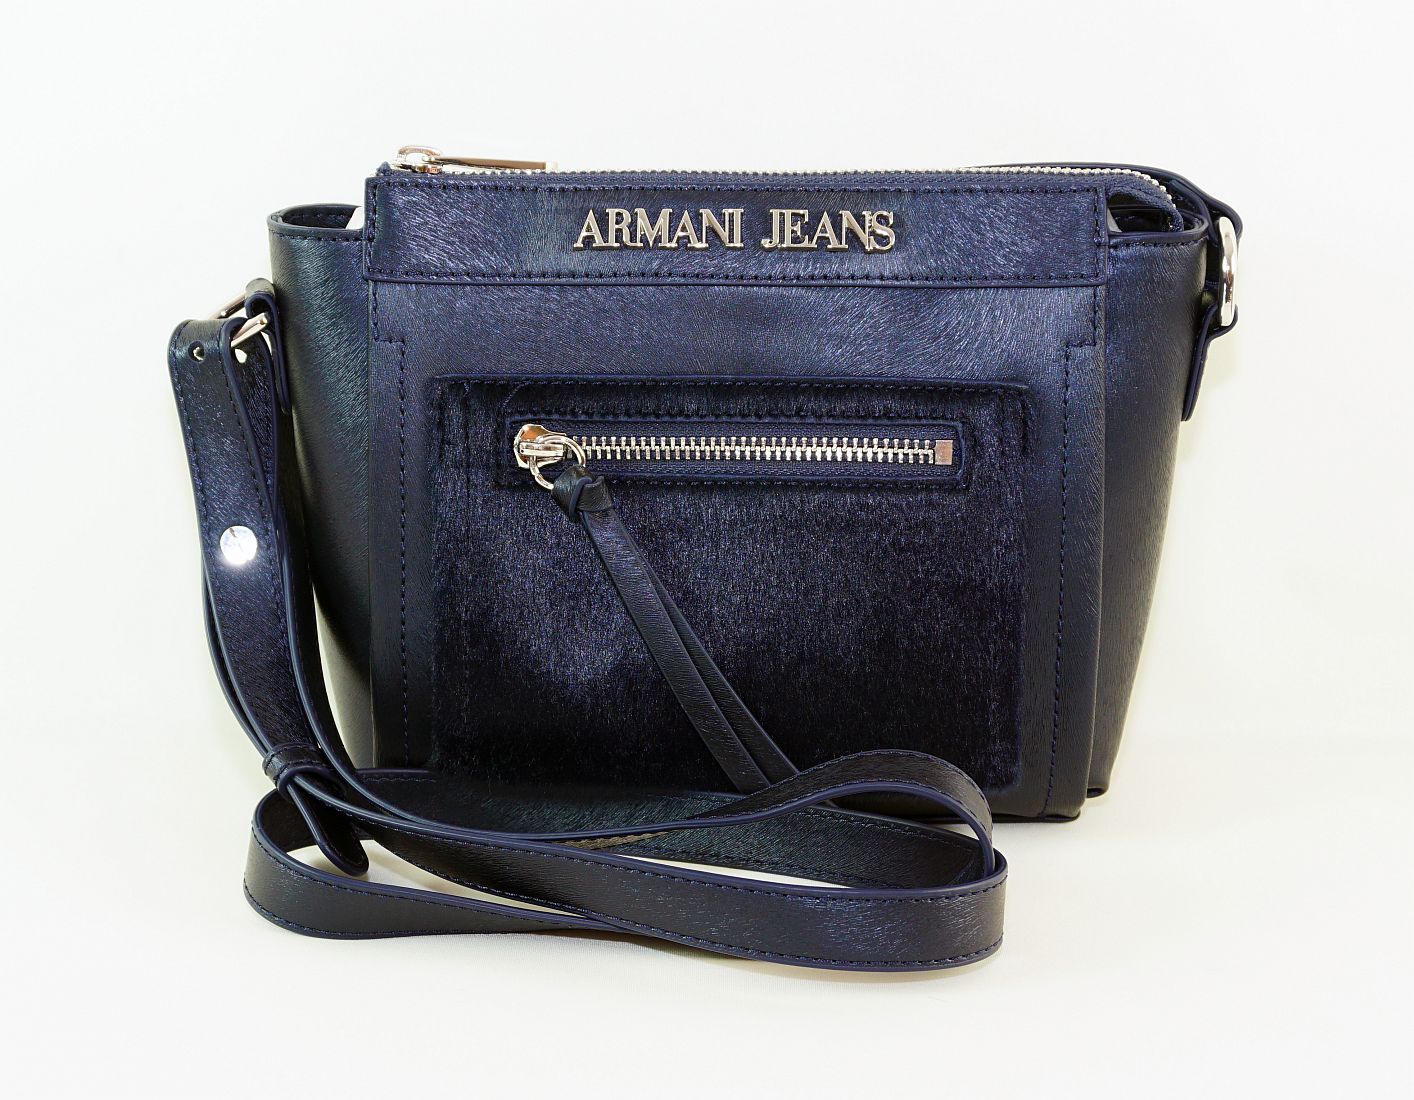 Armani Jeans Handtasche Shopper Tasche WOMEN'S SLING BAG 922104 6A728 31735 Patriot Blue HW16-1